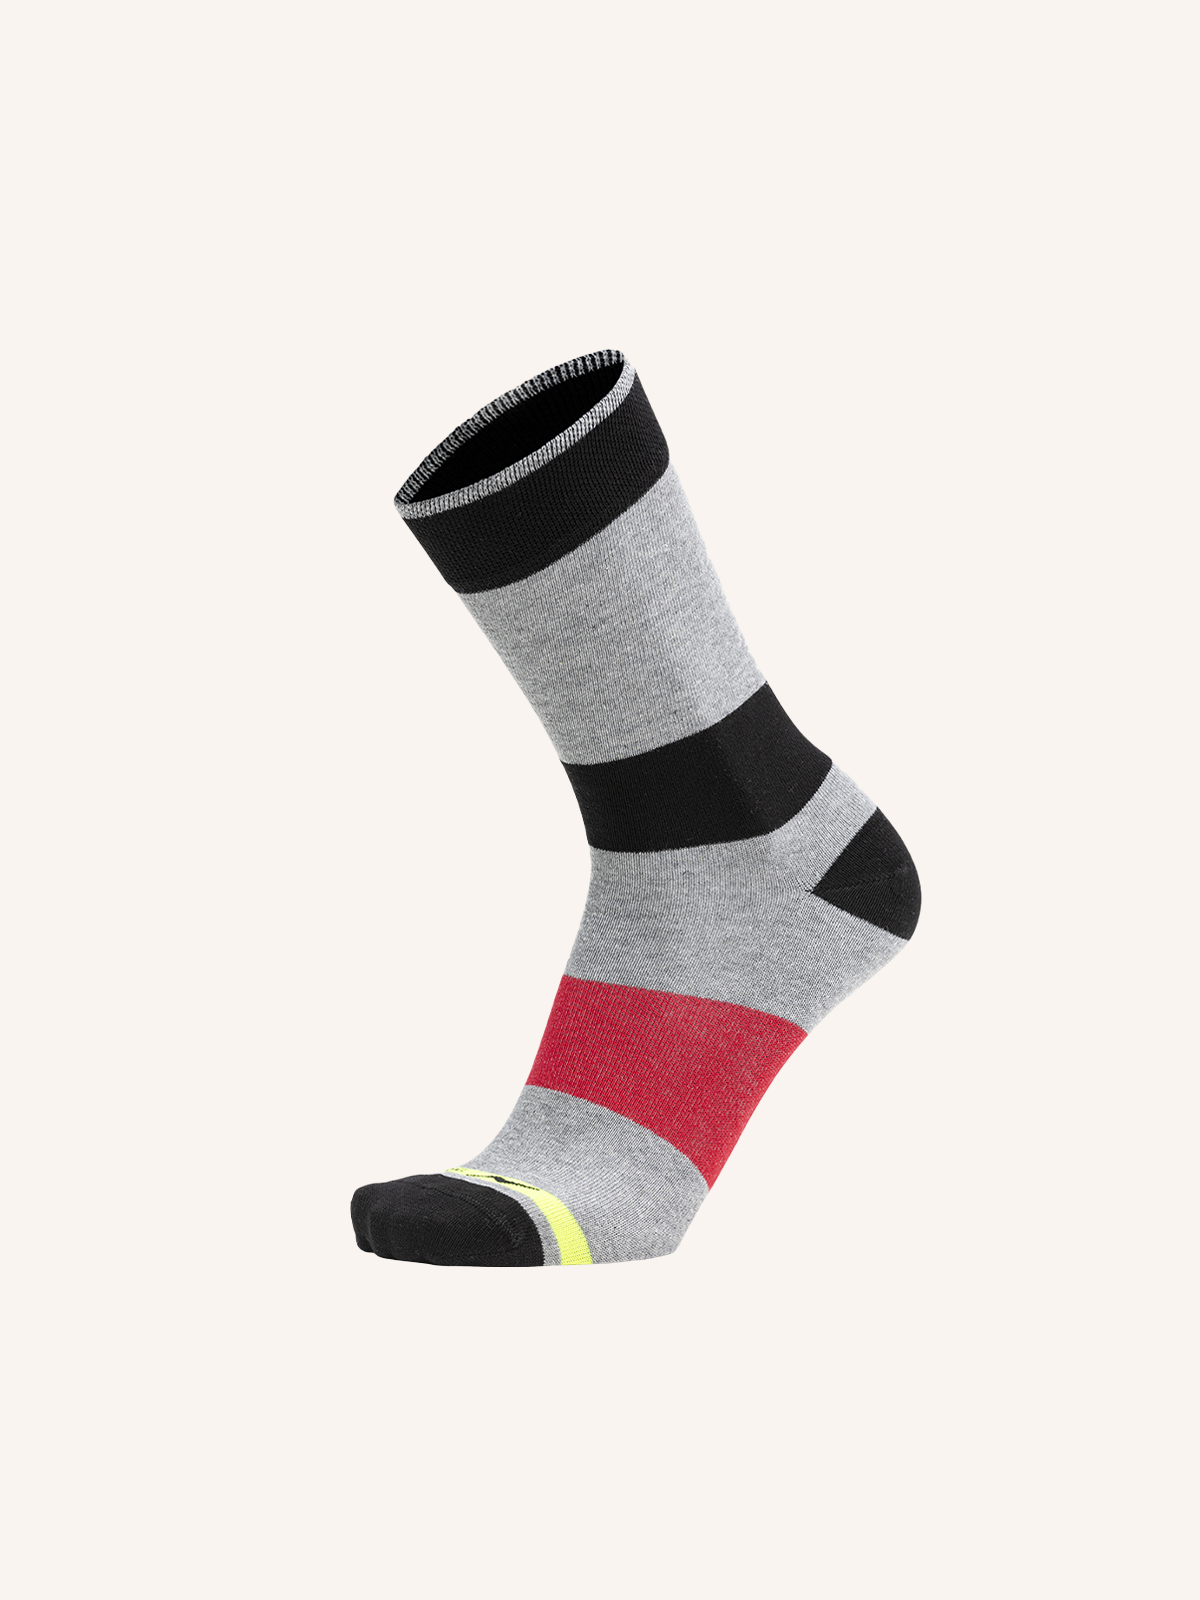 Cotton Short Sock for Men | Patterned | Single Pack | Urban Socks PRS 04